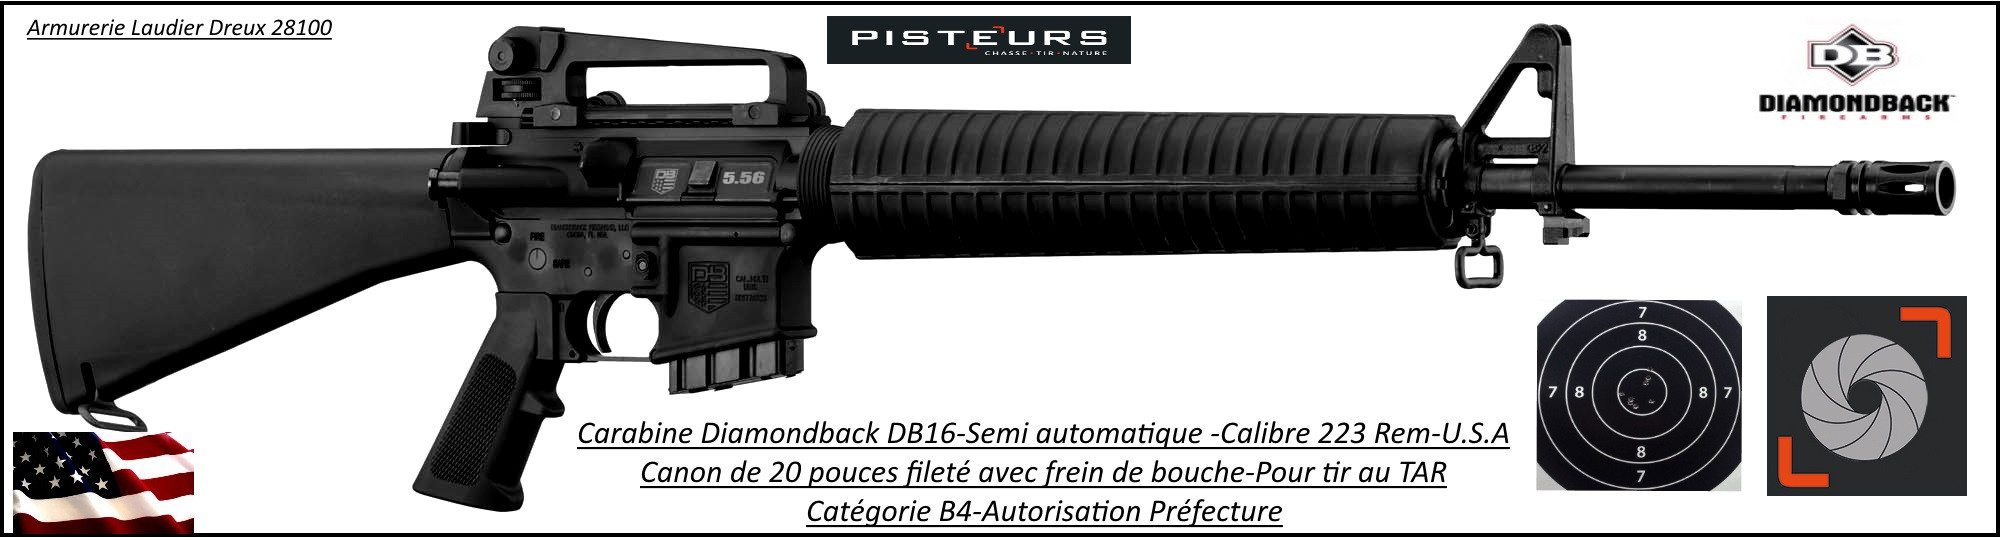 Carabine-Diamondback-DB16-Semi-automatique-U.S.A-Calibre 5.56 -223 Rem-TAR-Catégorie B4-Ref DB530-Autorisation Préfecture